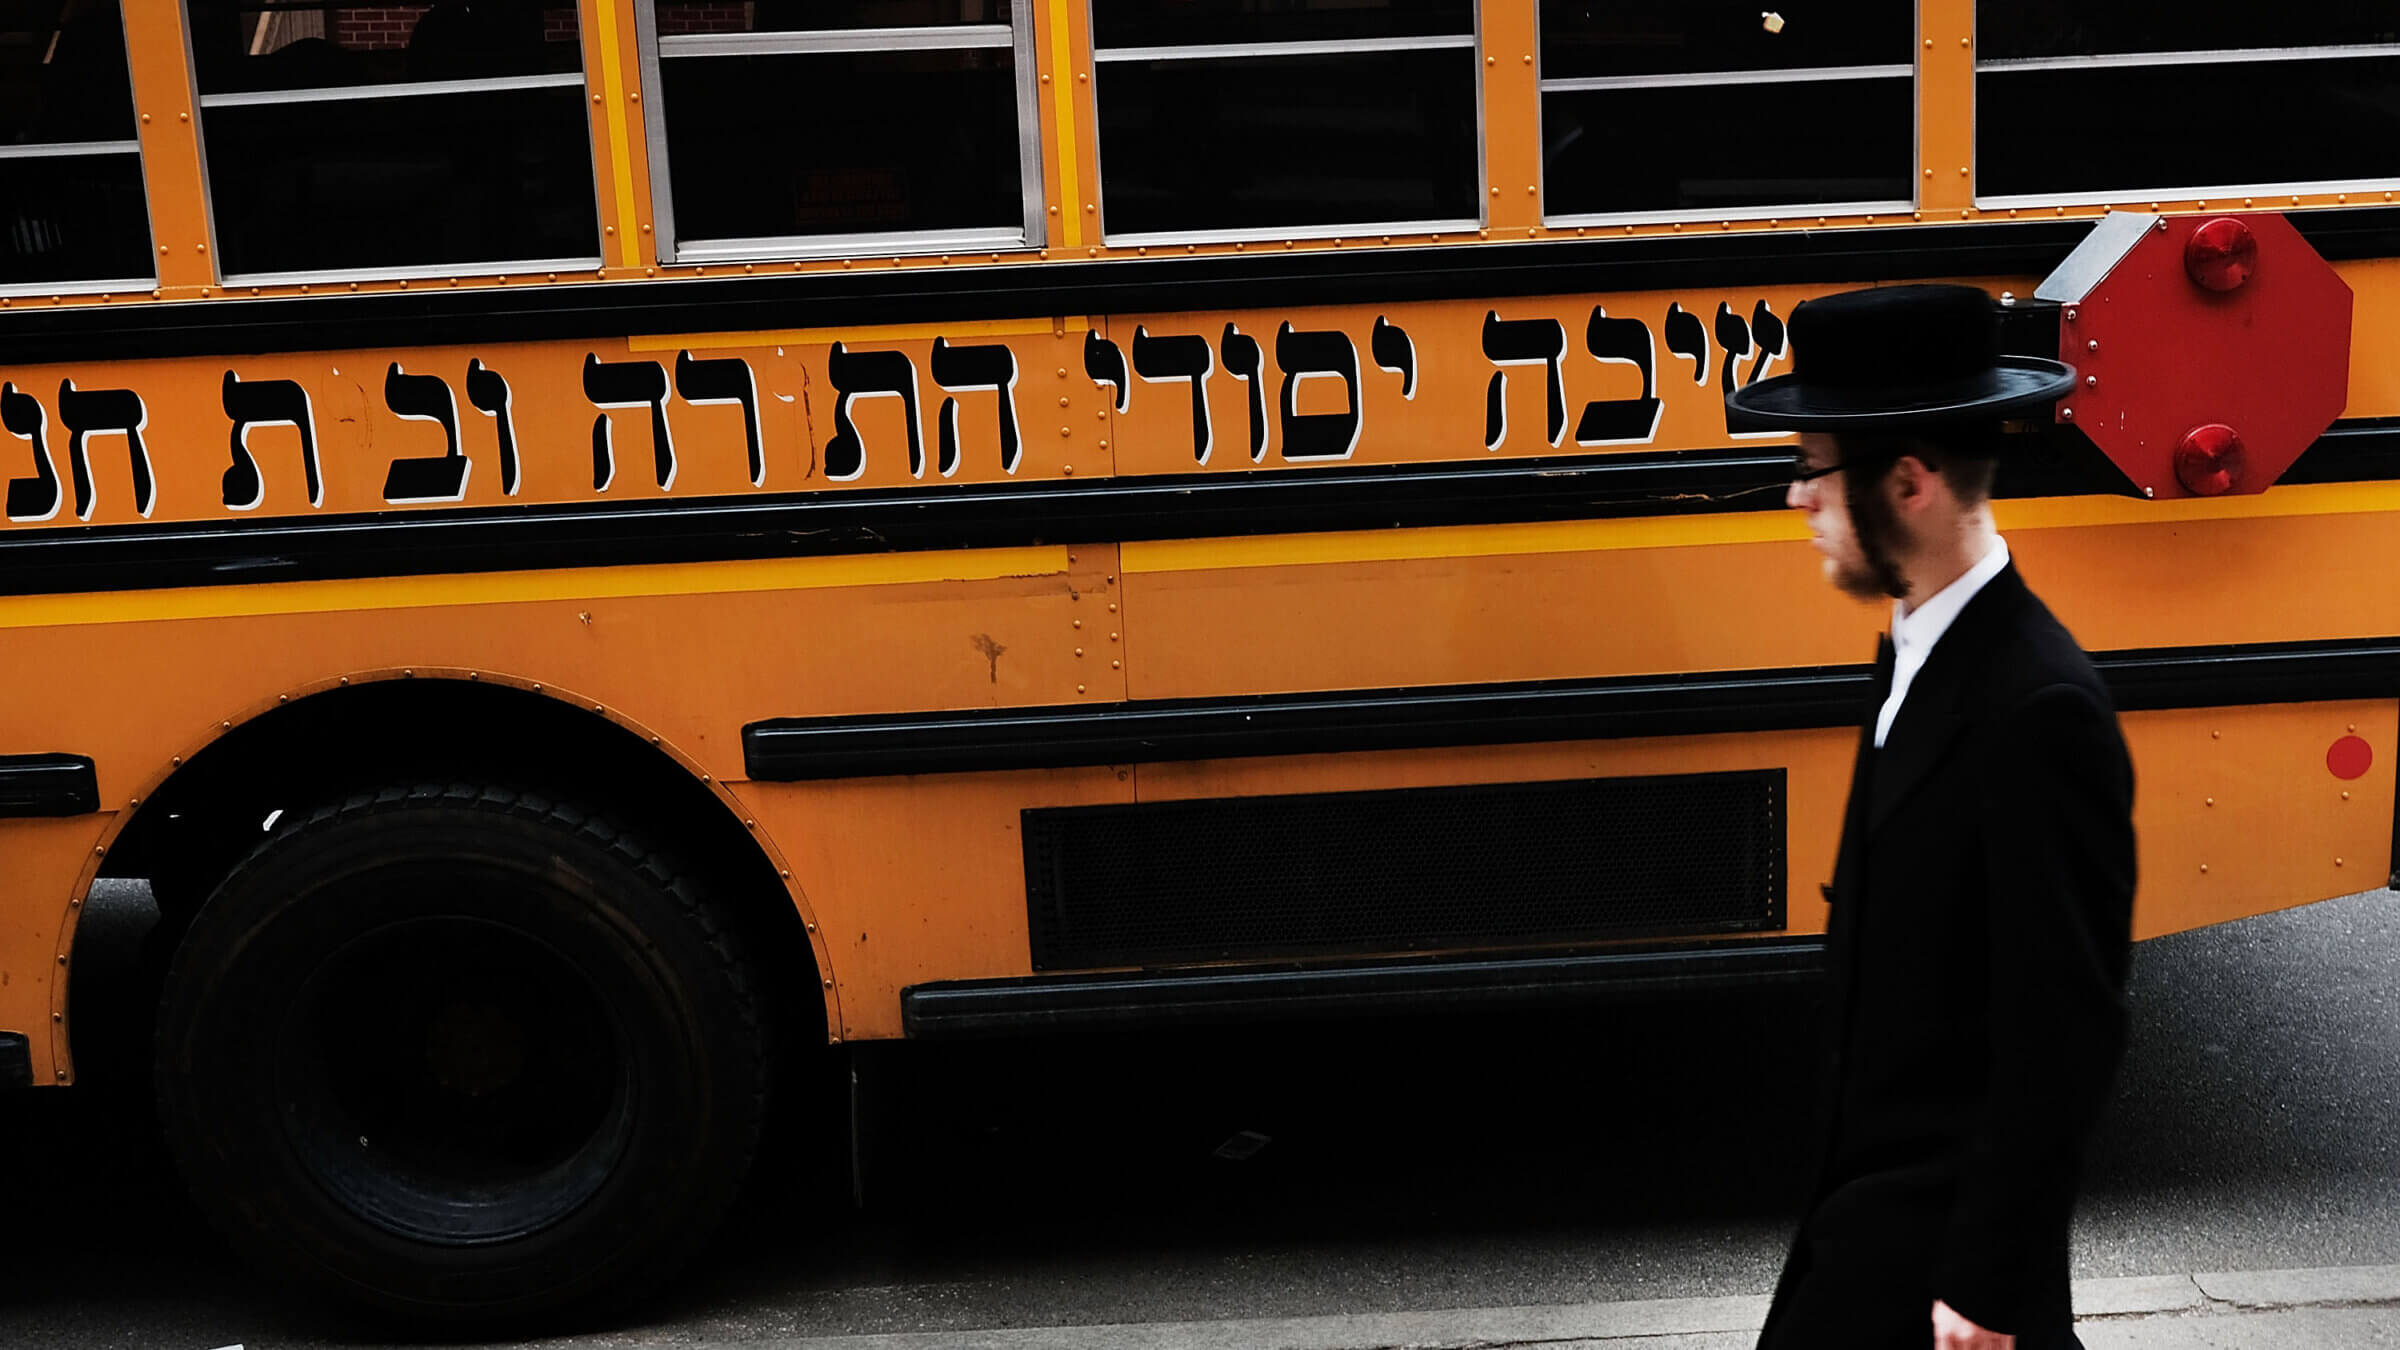 A Hasidic man walks through a Jewish Orthodox neighborhood in Brooklyn